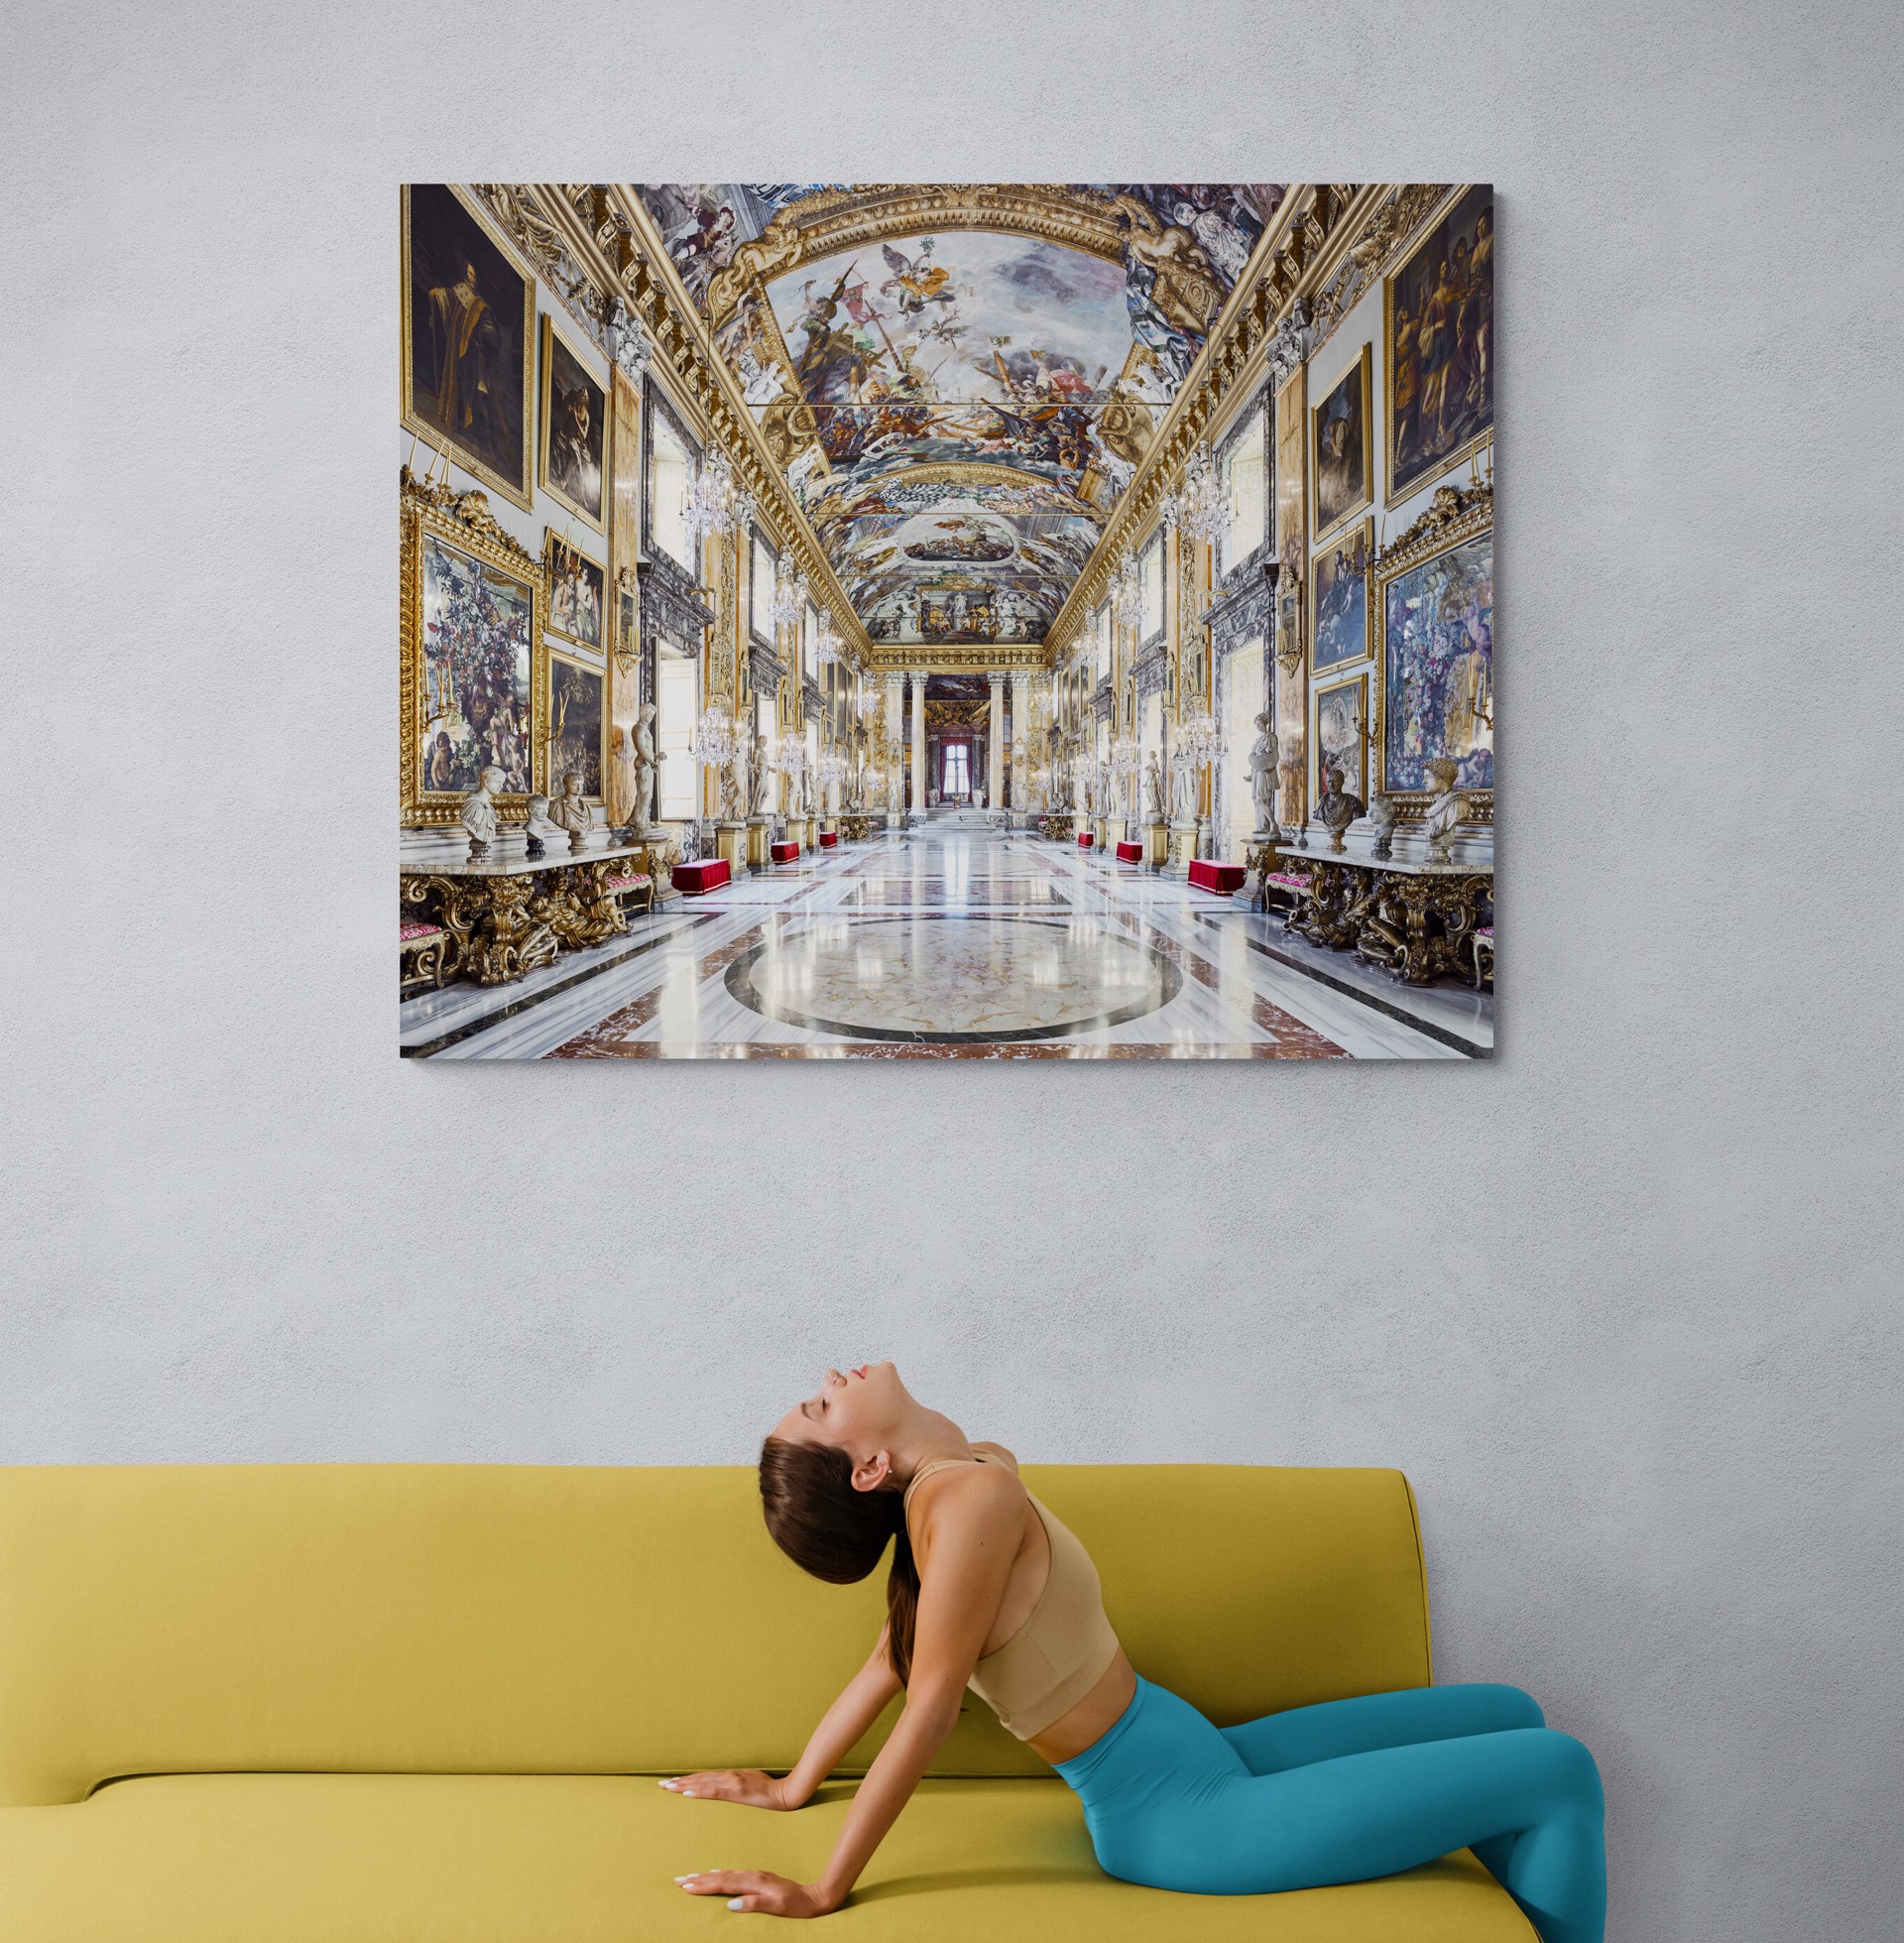 Galleria, Palazzo Colonna, Rome by David Burdeny